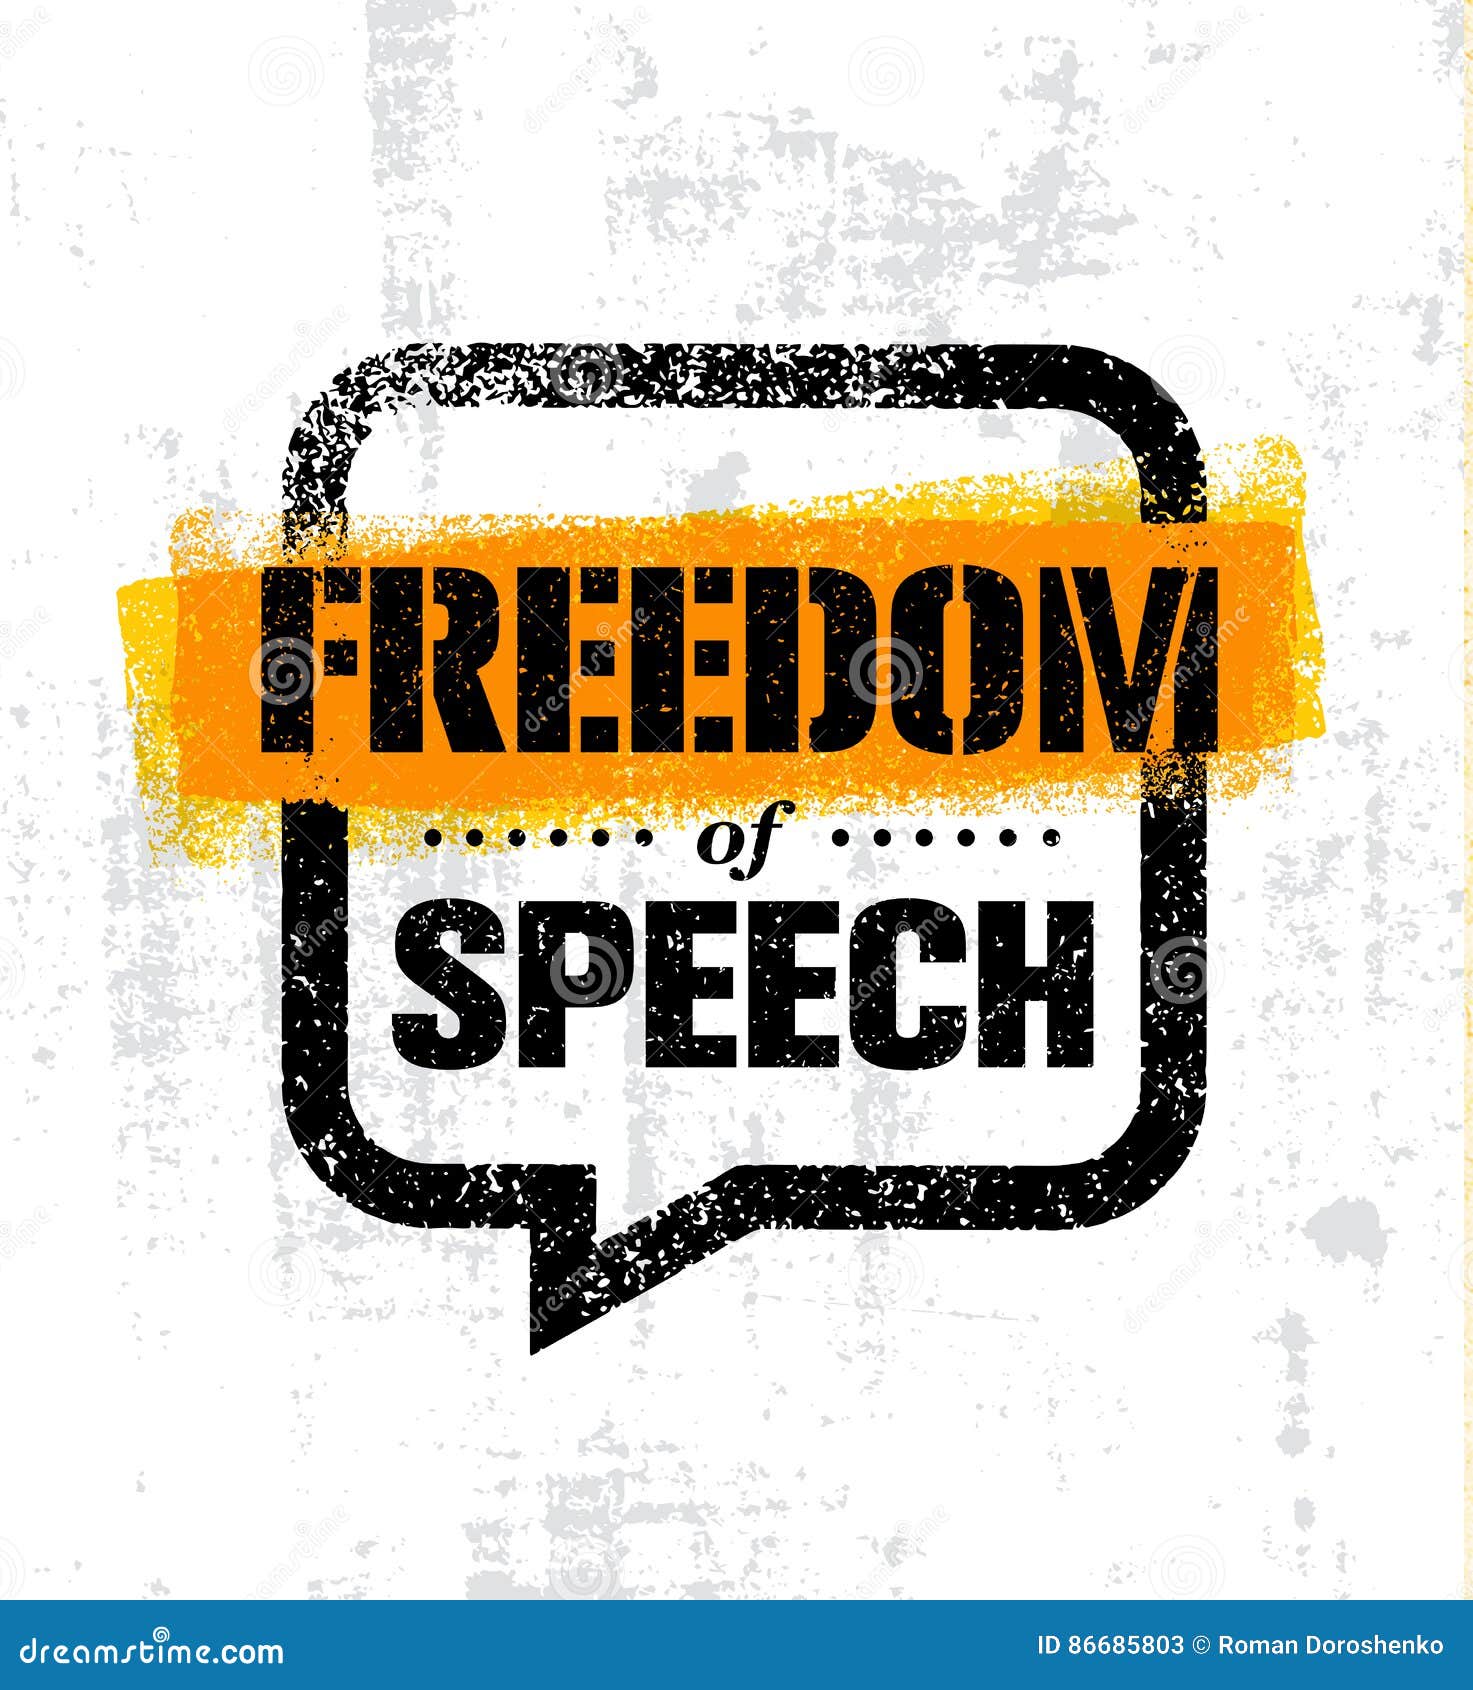 creative freedom of speech